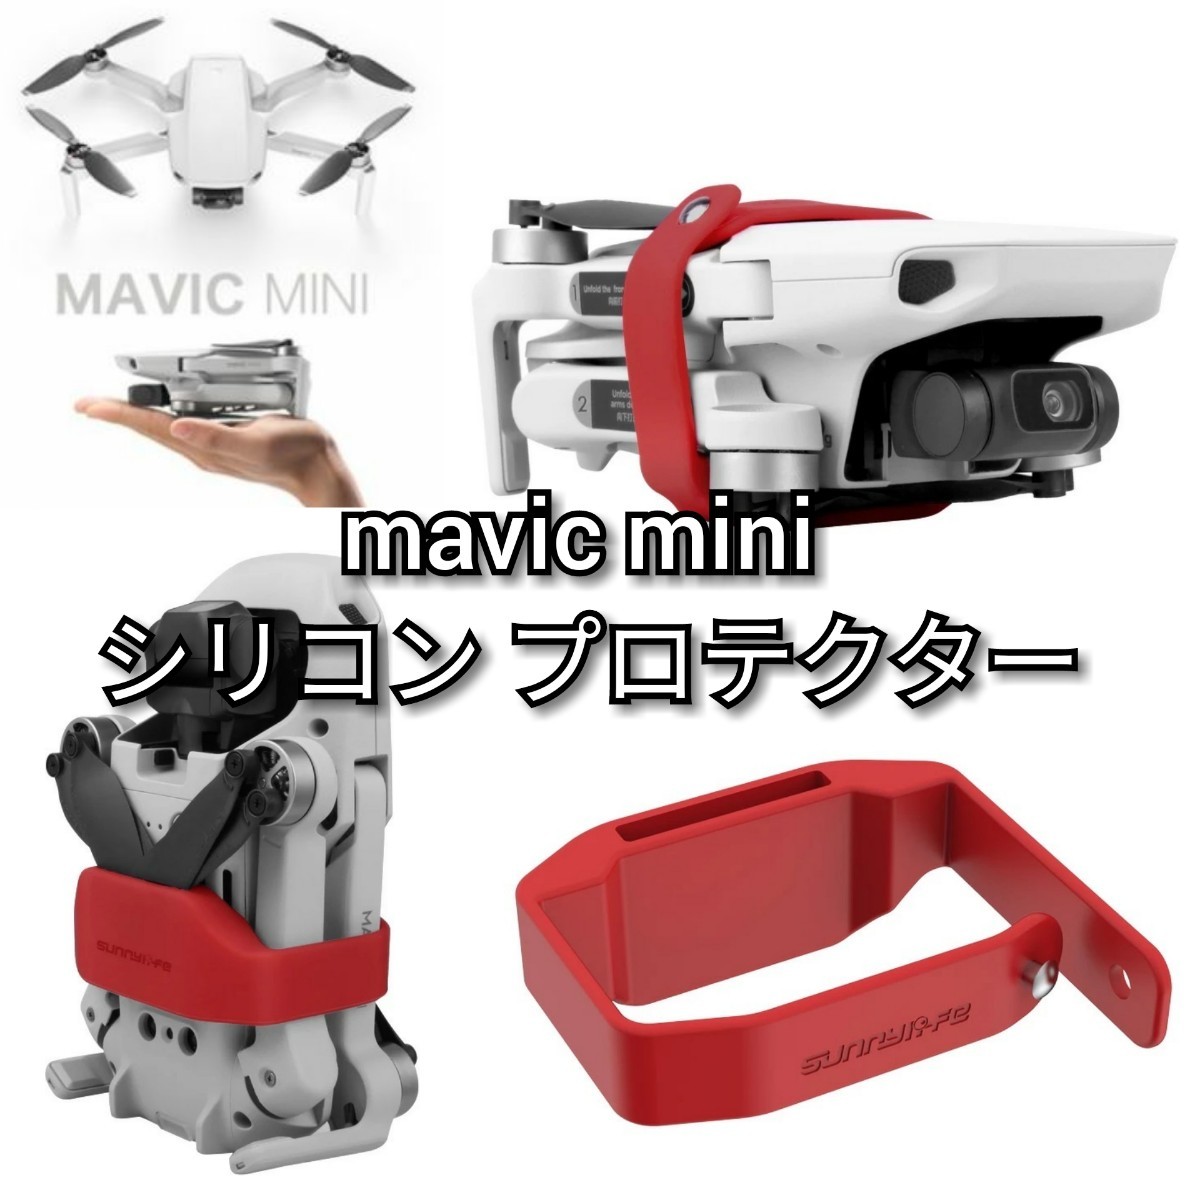 ■mavic mini シリコン プロテクター 1個【RED or BLACK】